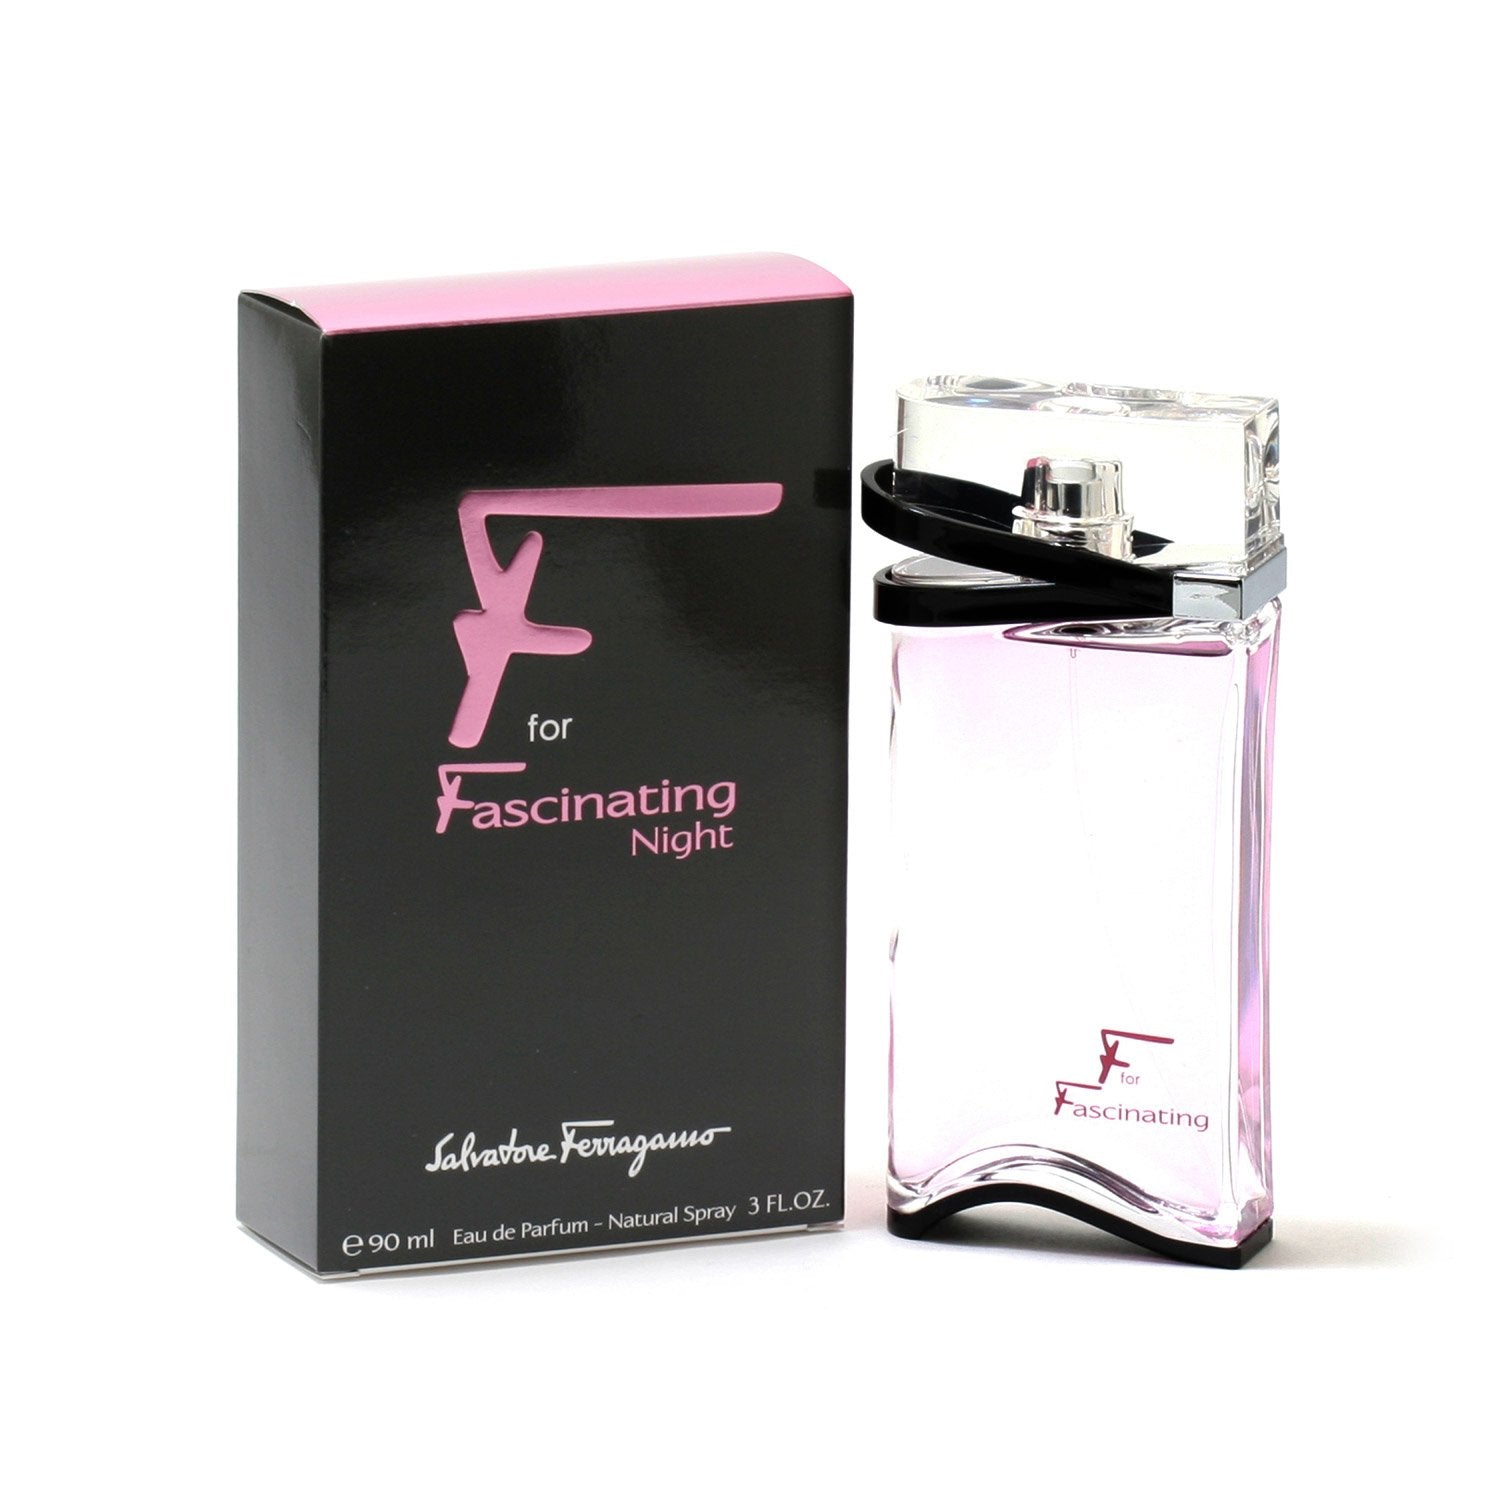 Perfume - F FOR FASCINATING NIGHT FOR WOMEN BY SALVATORE FERRAGAMO - EAU DE PARFUM SPRAY, 3.0 OZ